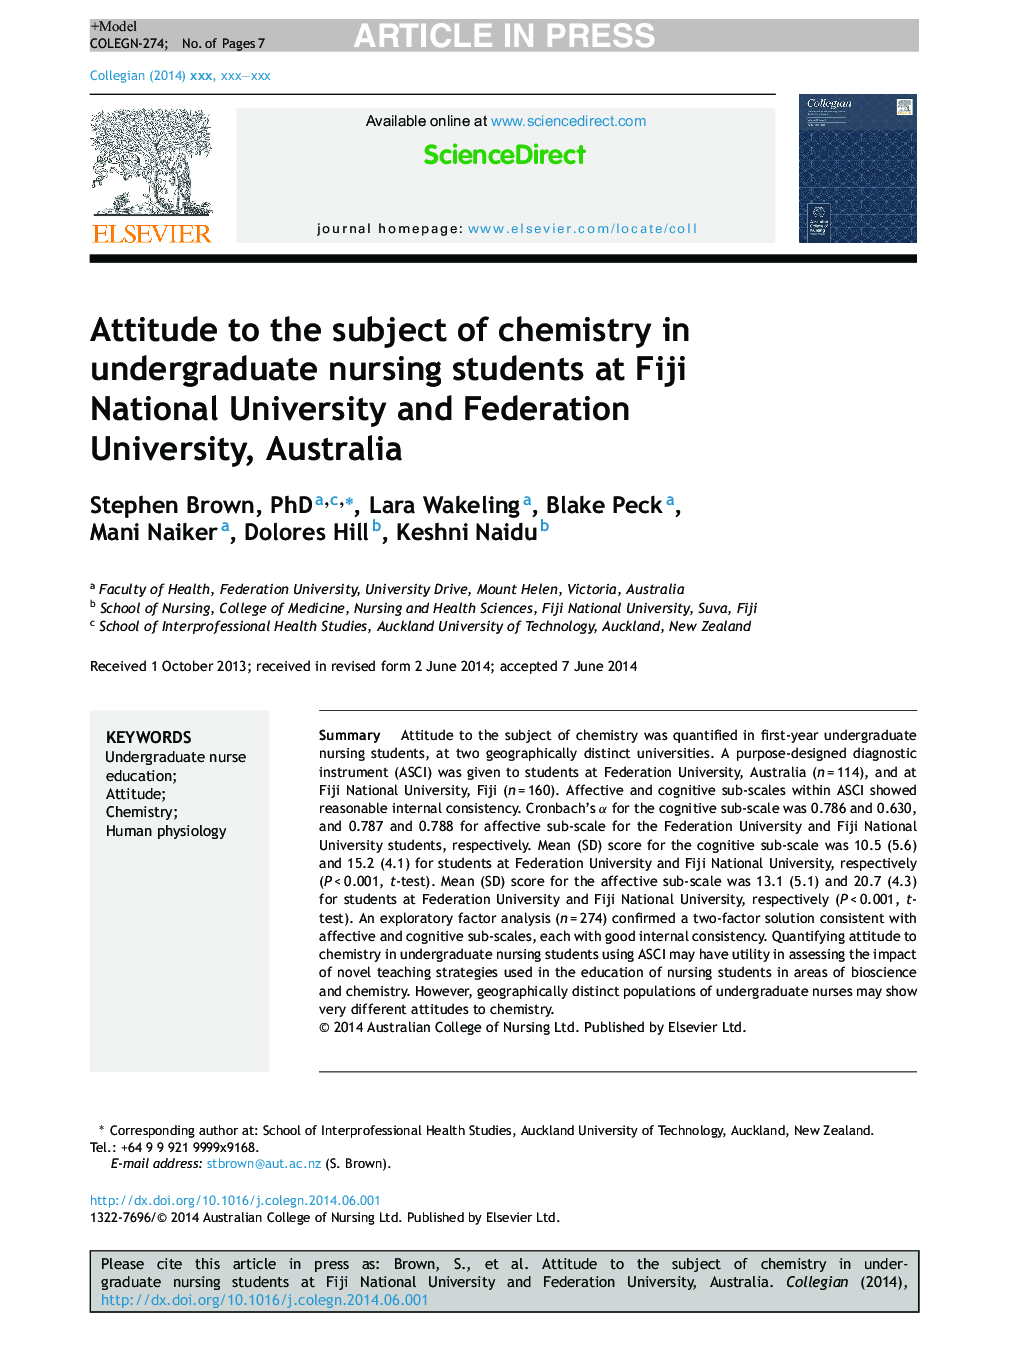 Attitude to the subject of chemistry in undergraduate nursing students at Fiji National University and Federation University, Australia